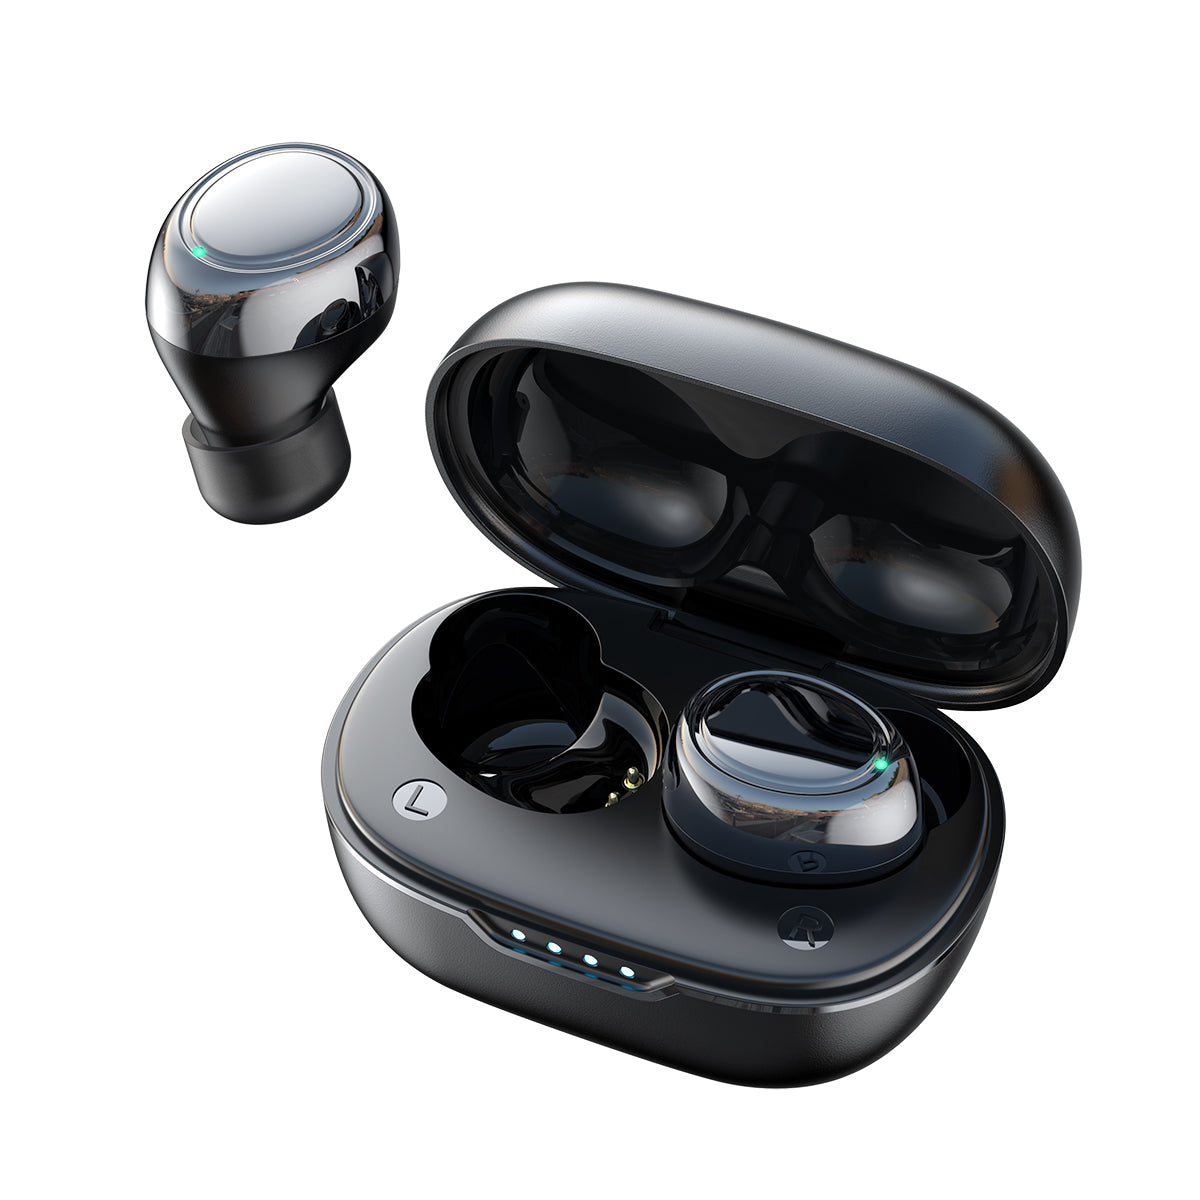 Joyroom Jpods casque d'écoute Bluetooth antibruit noir